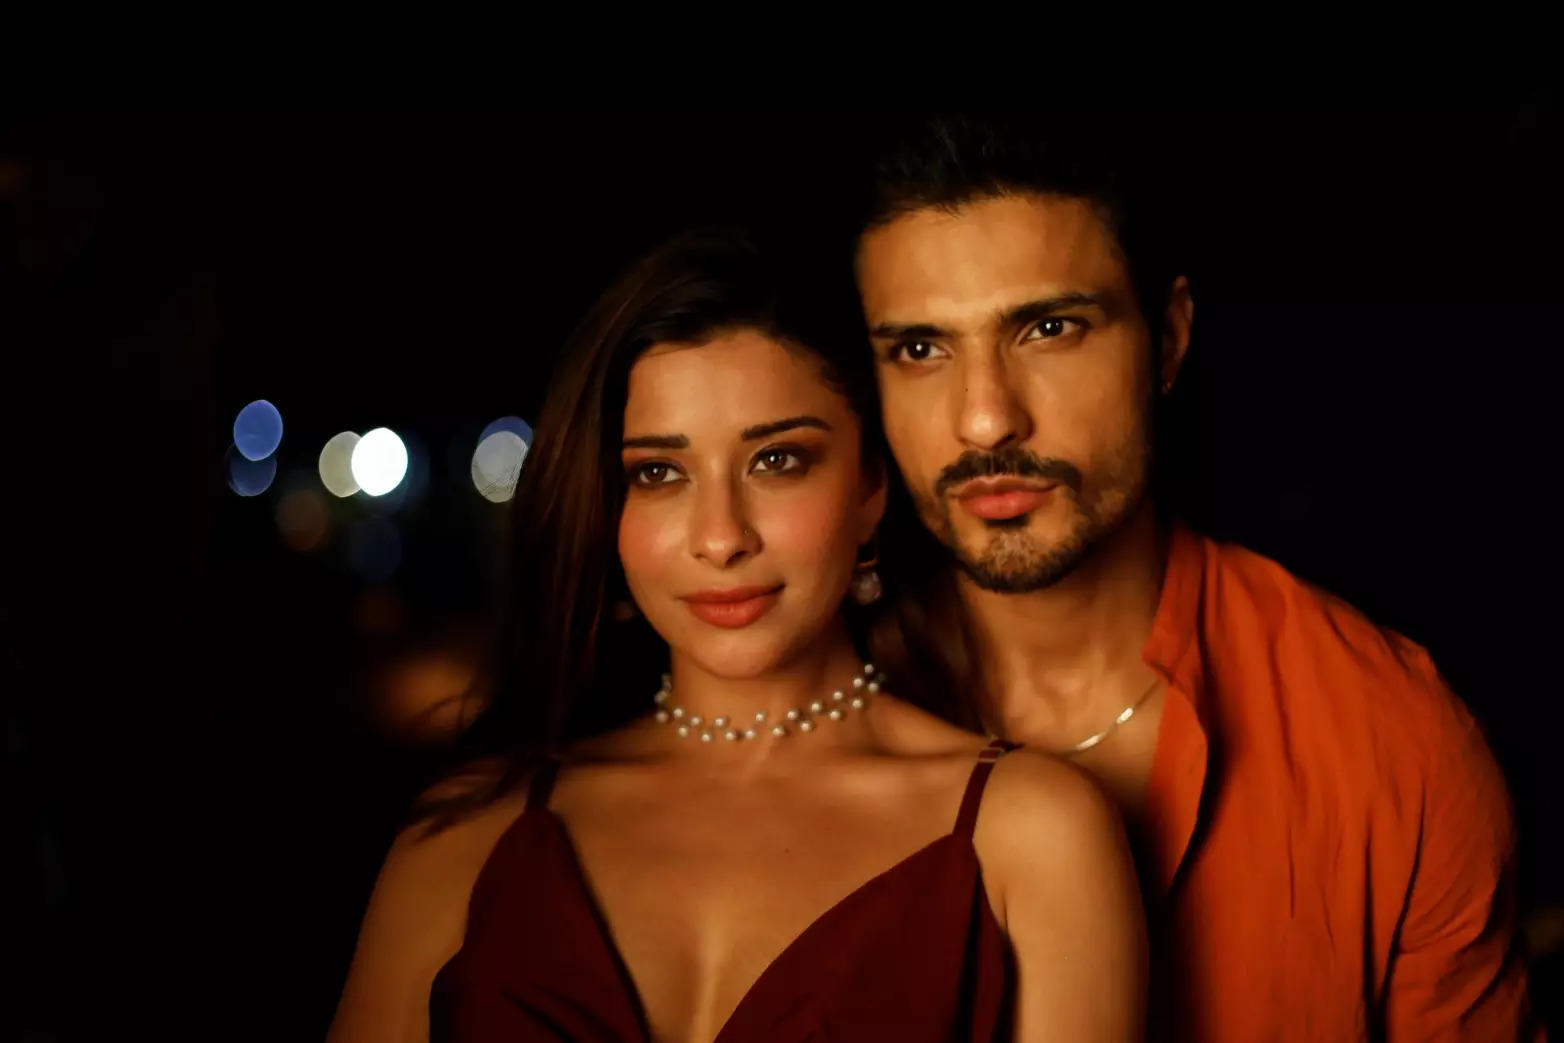 Baba Beats’ new music video features actors Nyrraa M Banerji and Vin Rana